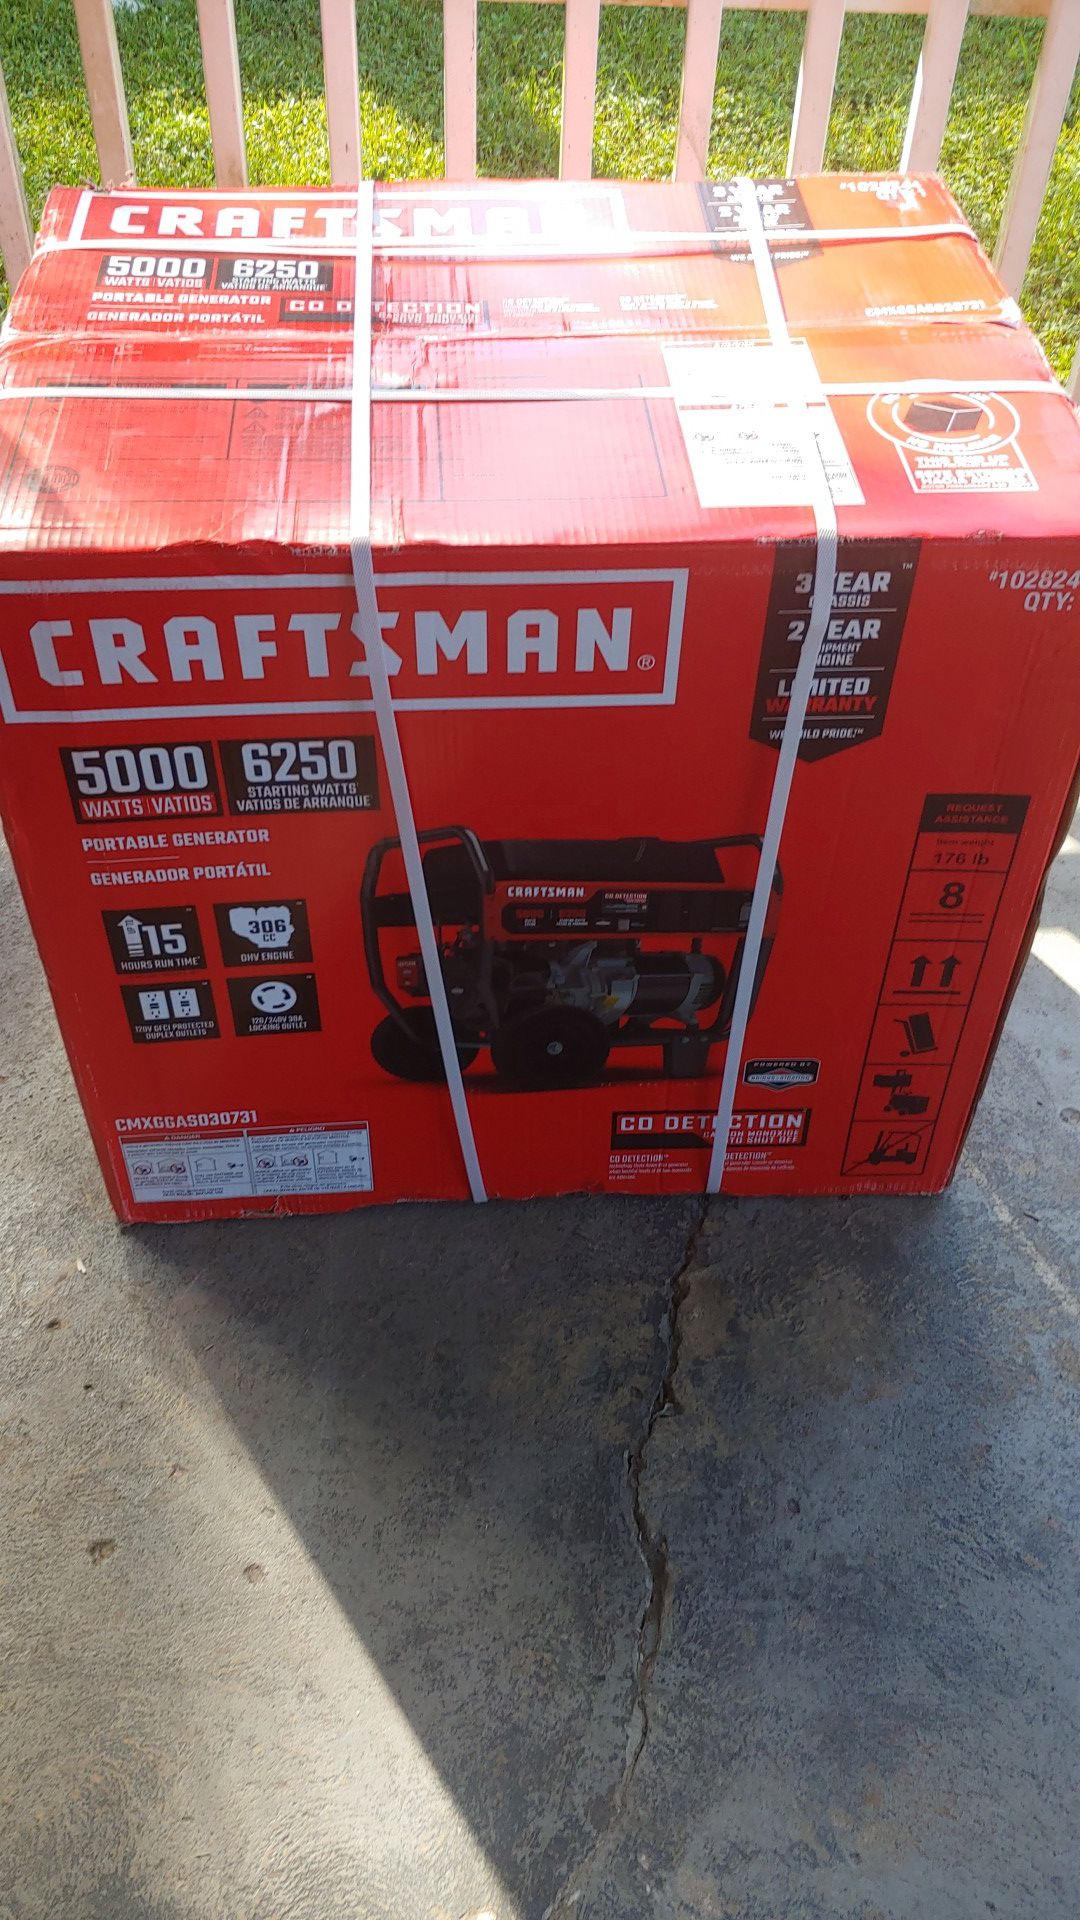 Craftsman portable generator 5000 watts